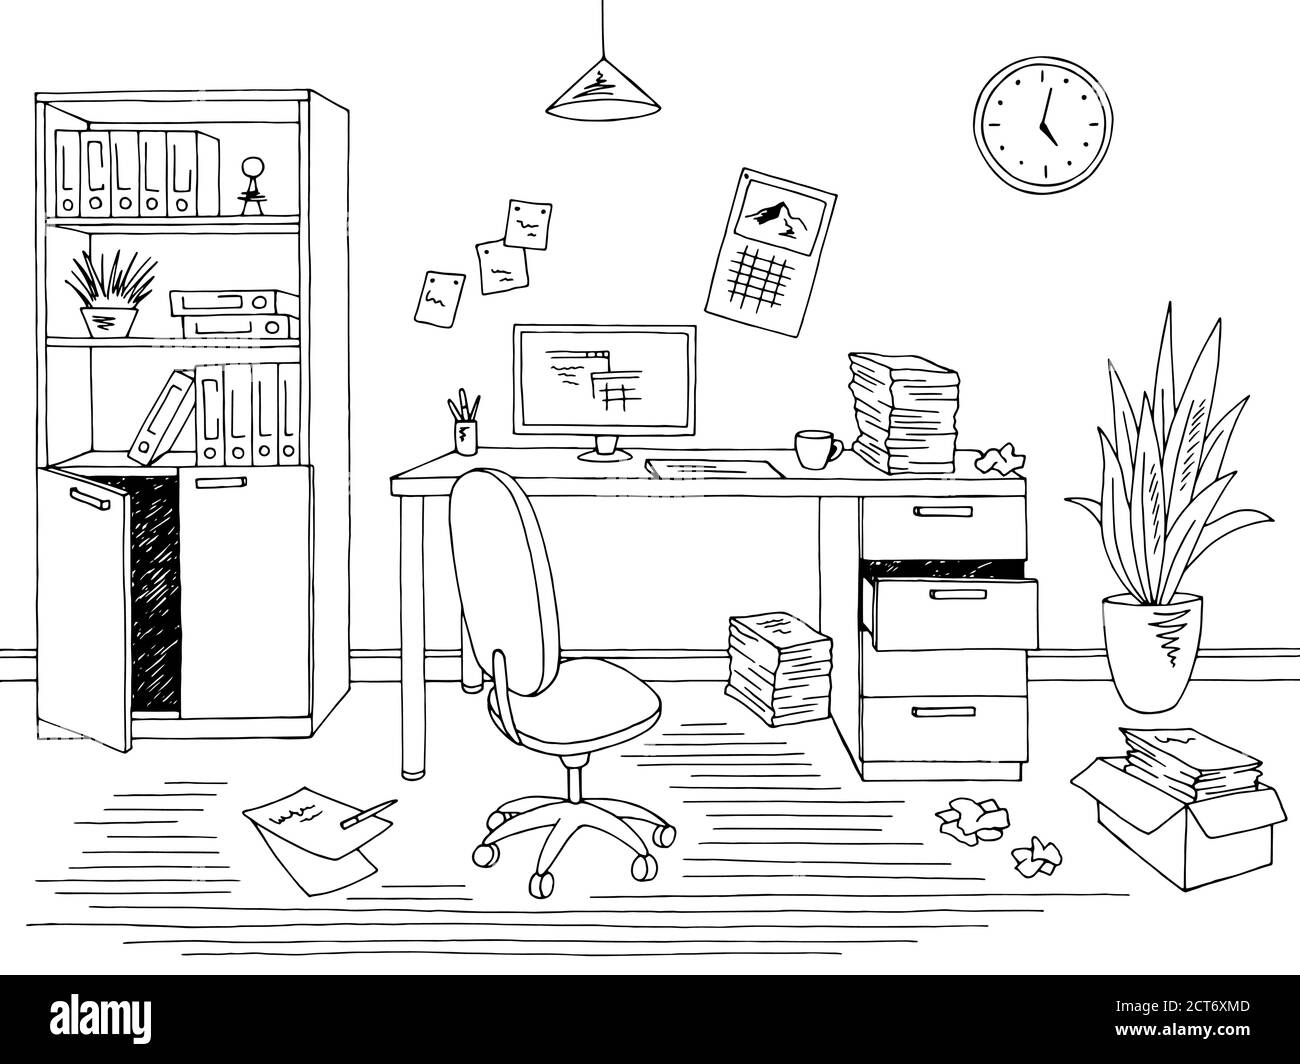 Office Mess Grafik schwarz weiß Innenraum Skizze Illustration Vektor Stock Vektor